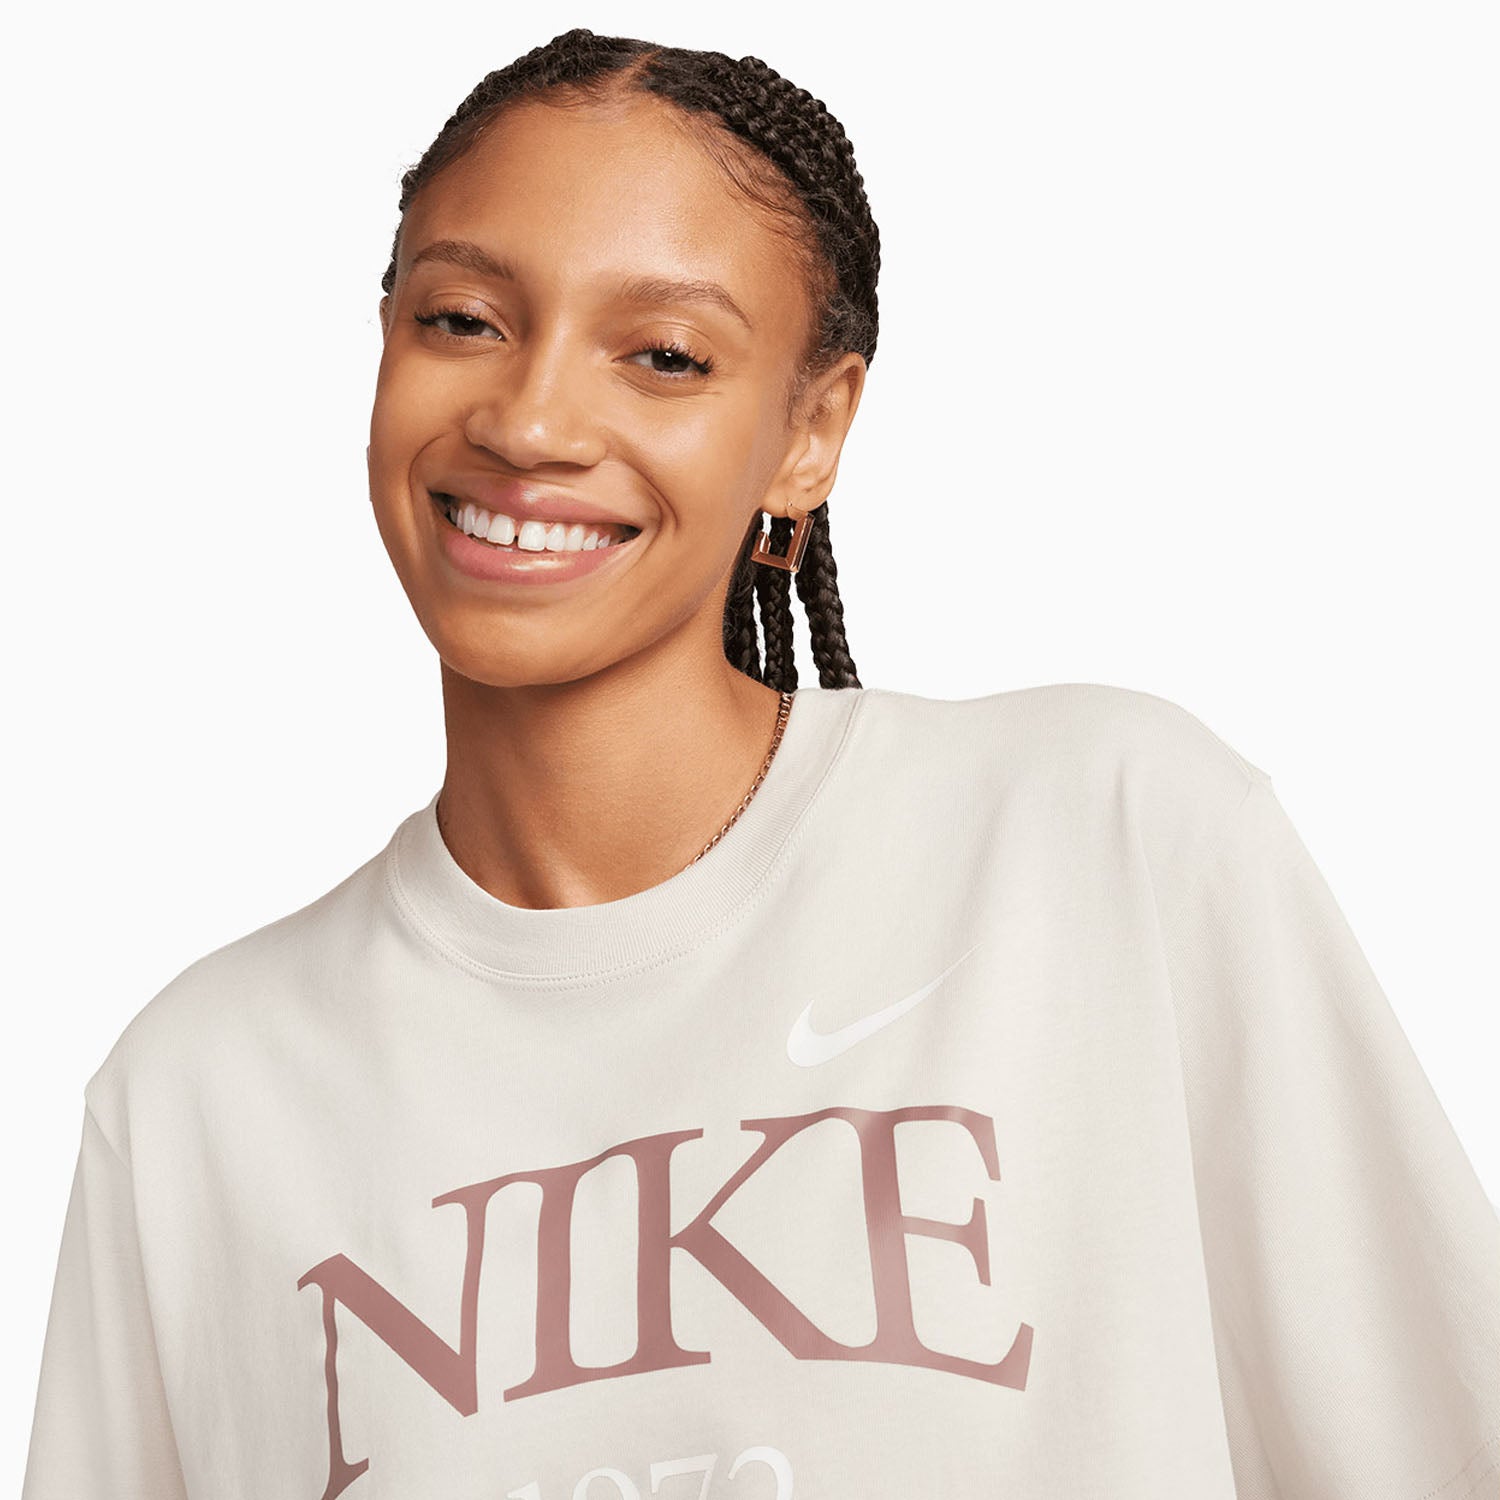 nike-womens-sportswear-classic-short-sleeve-t-shirt-fq6600-104